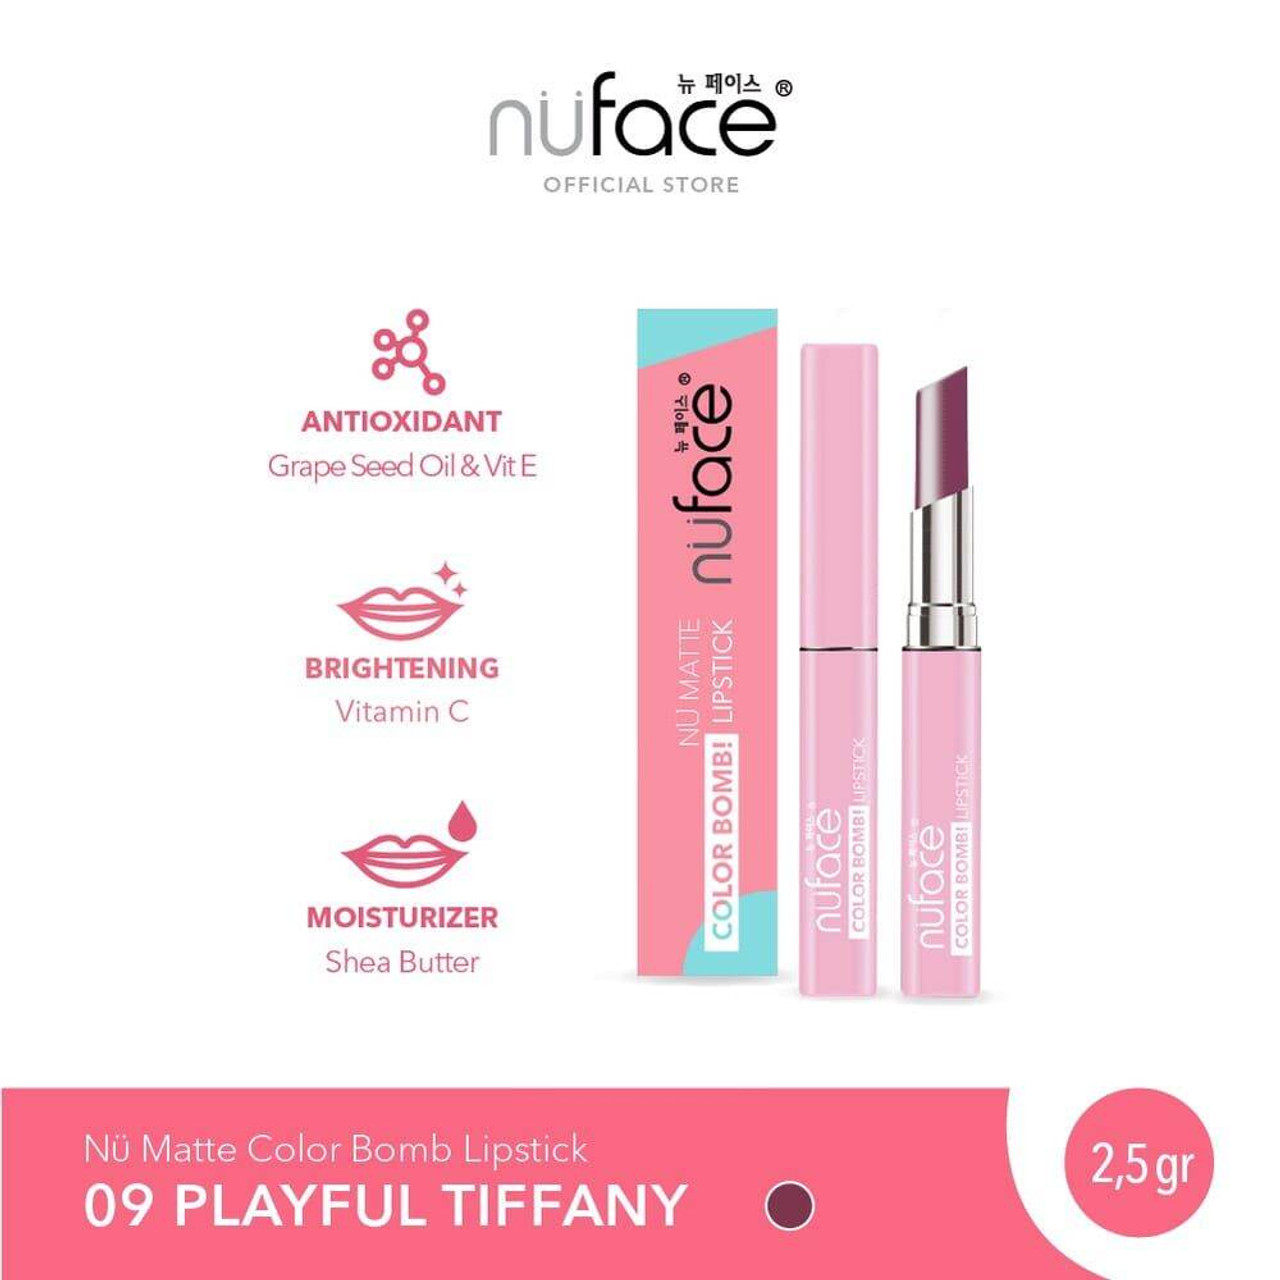 Nuface Nu Matte Color Bomb Lipstick Playful Tiffany, 2.5gr